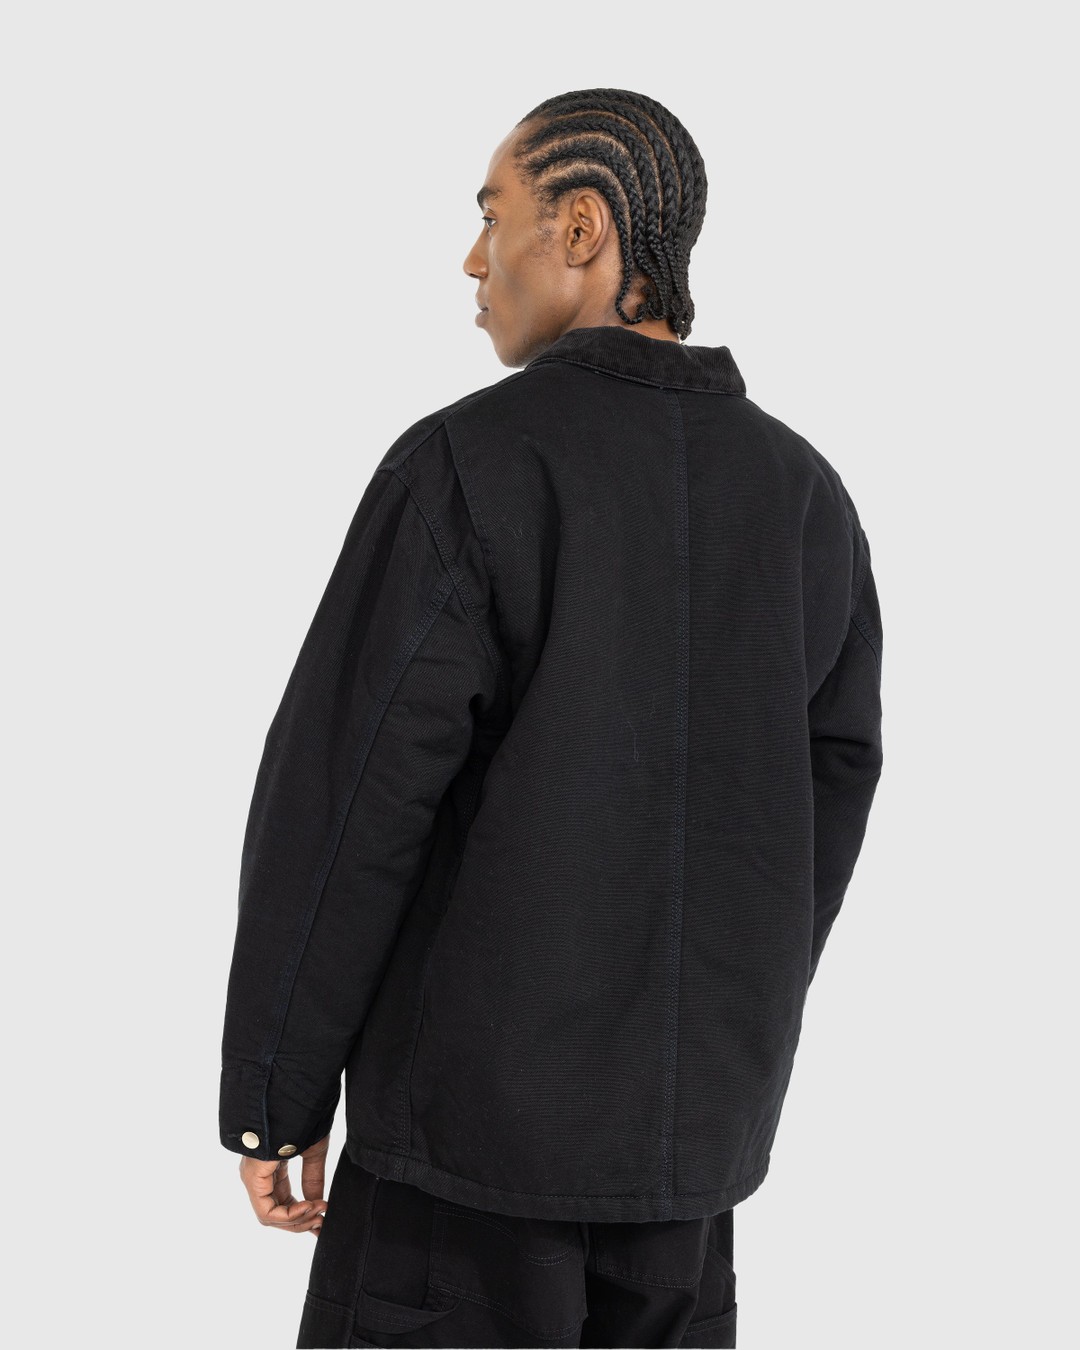 Carhartt WIP – OG Chore Coat Black/Aged Canvas - Outerwear - Black - Image 3